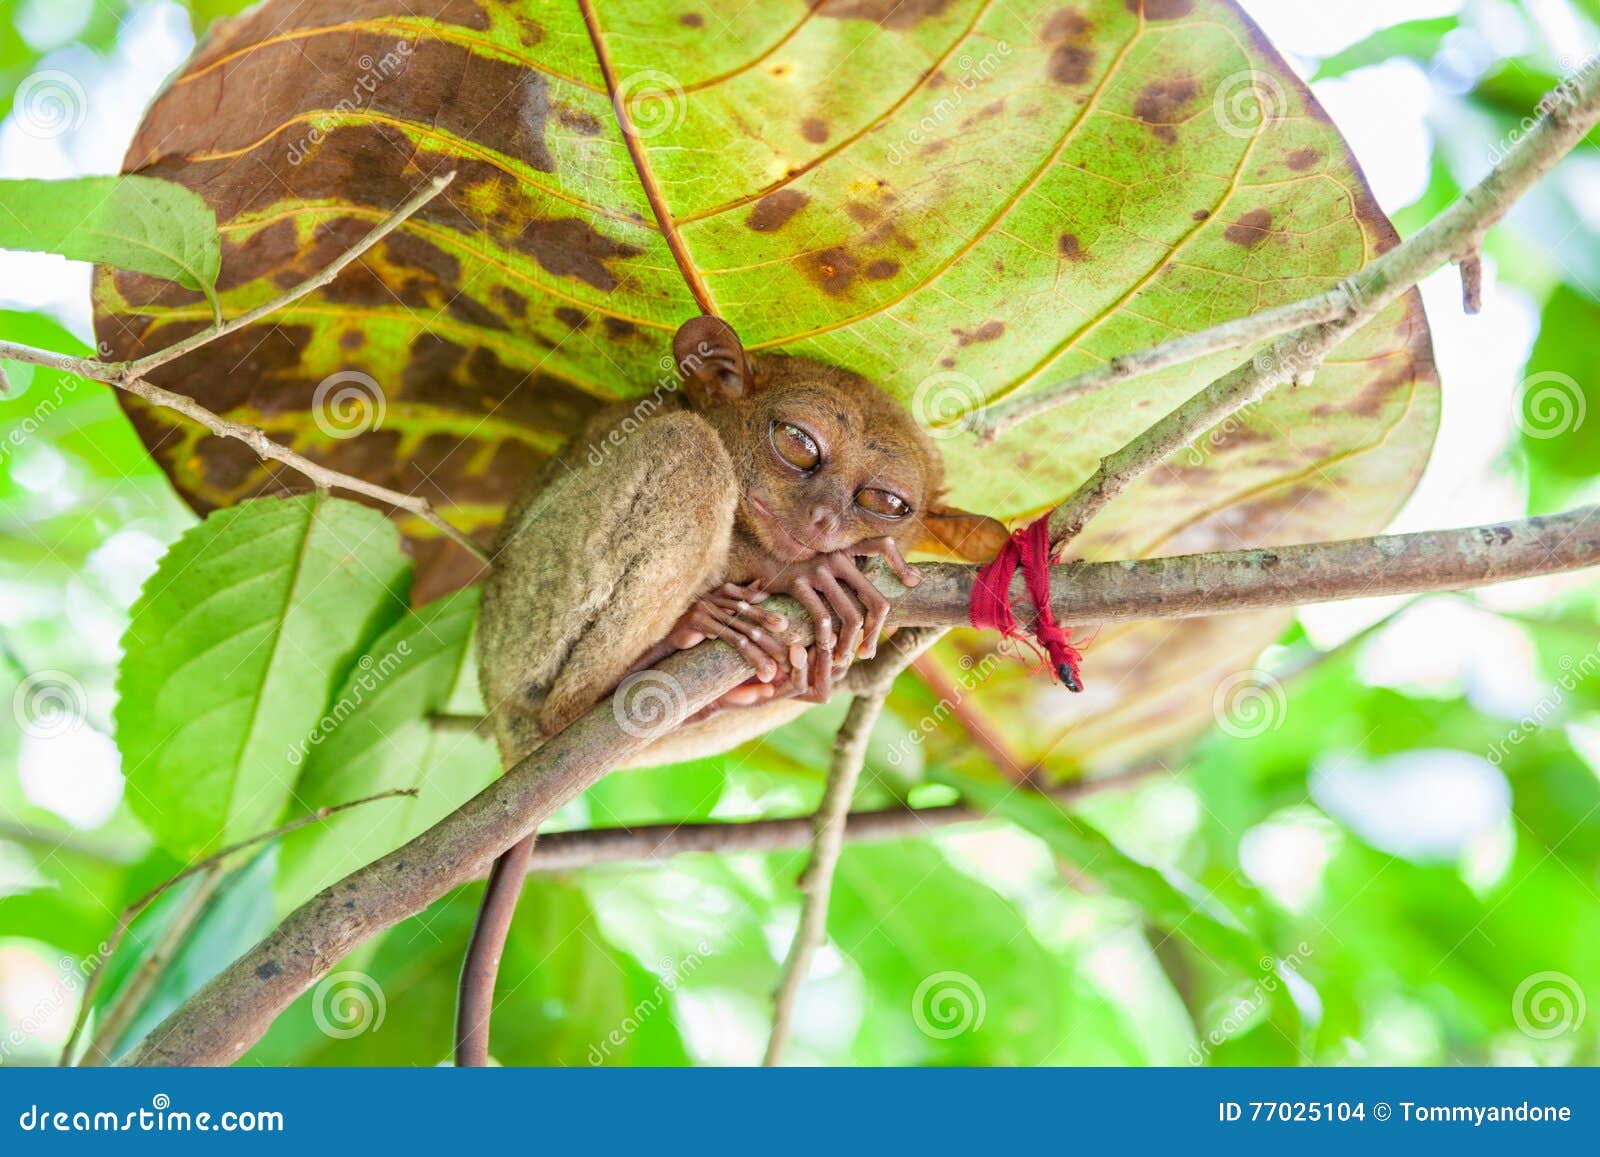 philippines tarsier from bohol